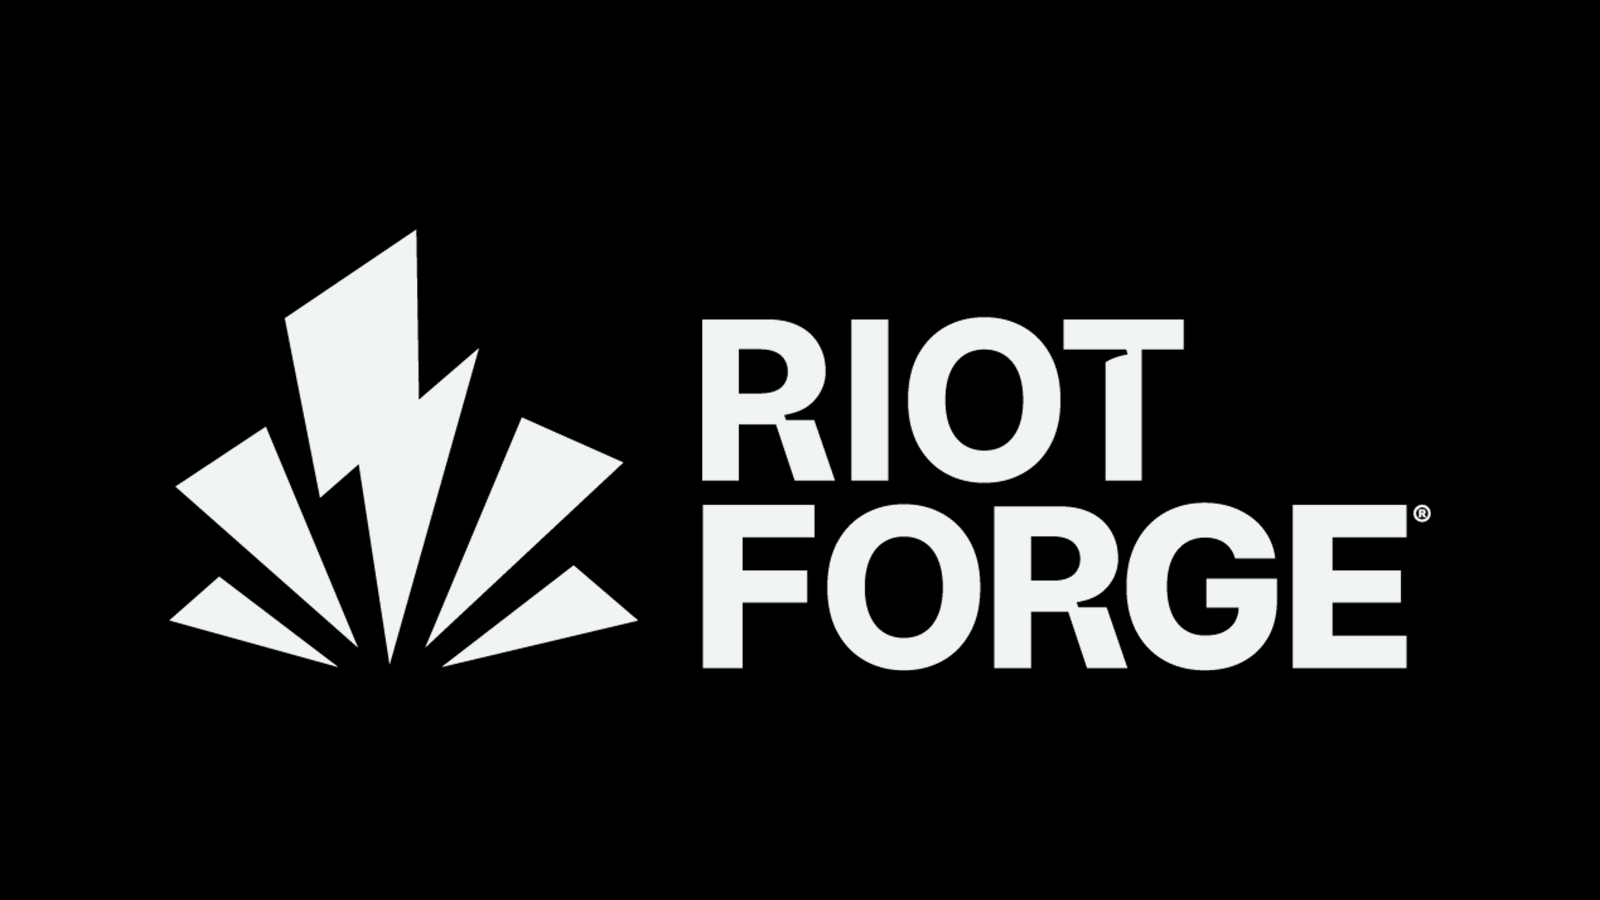 Riot Forge: Kreative Erweiterung des League of Legends-Universums